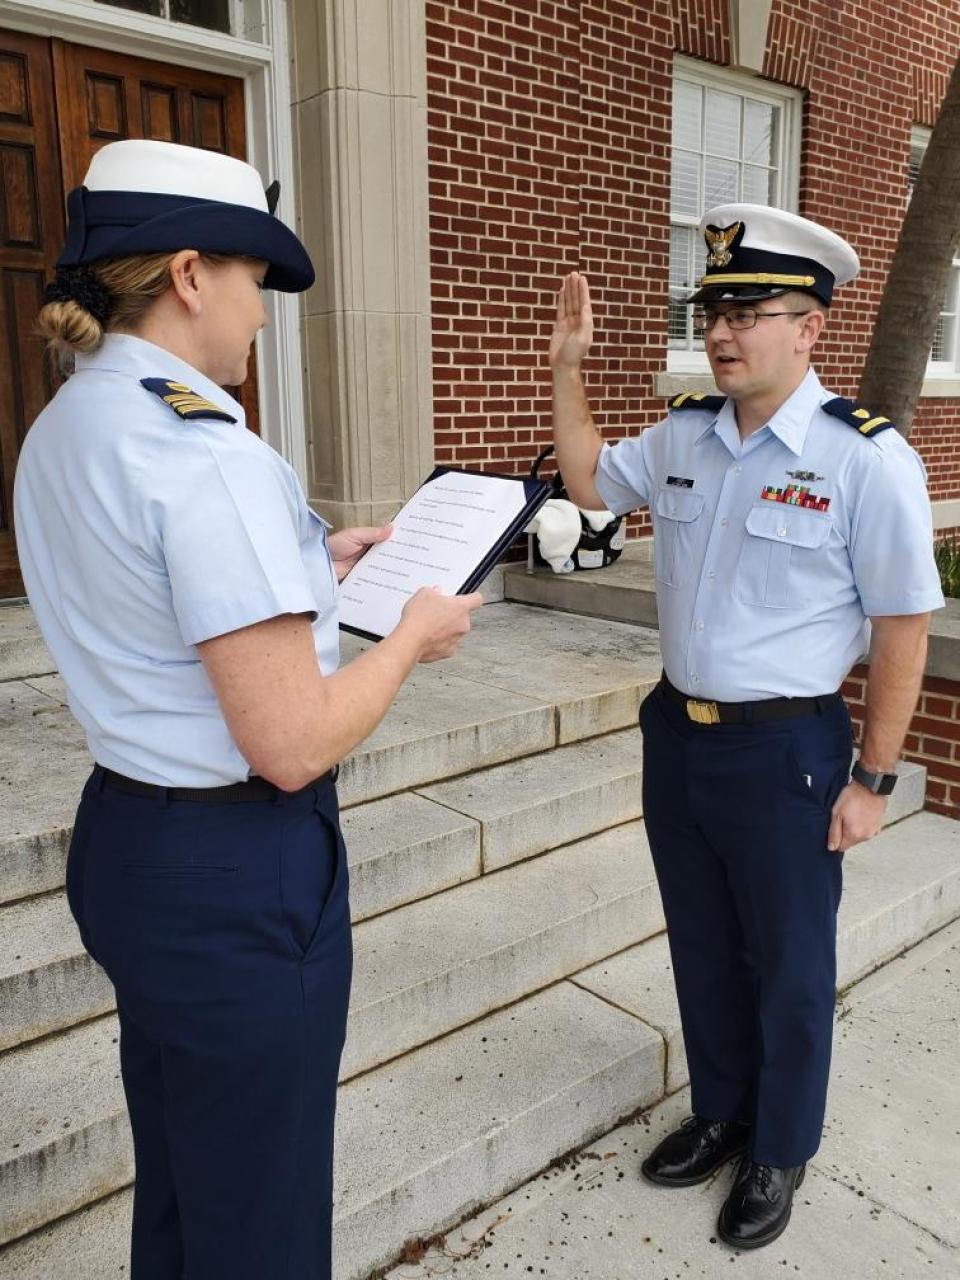 U.S. Coast Guard member being sworn in